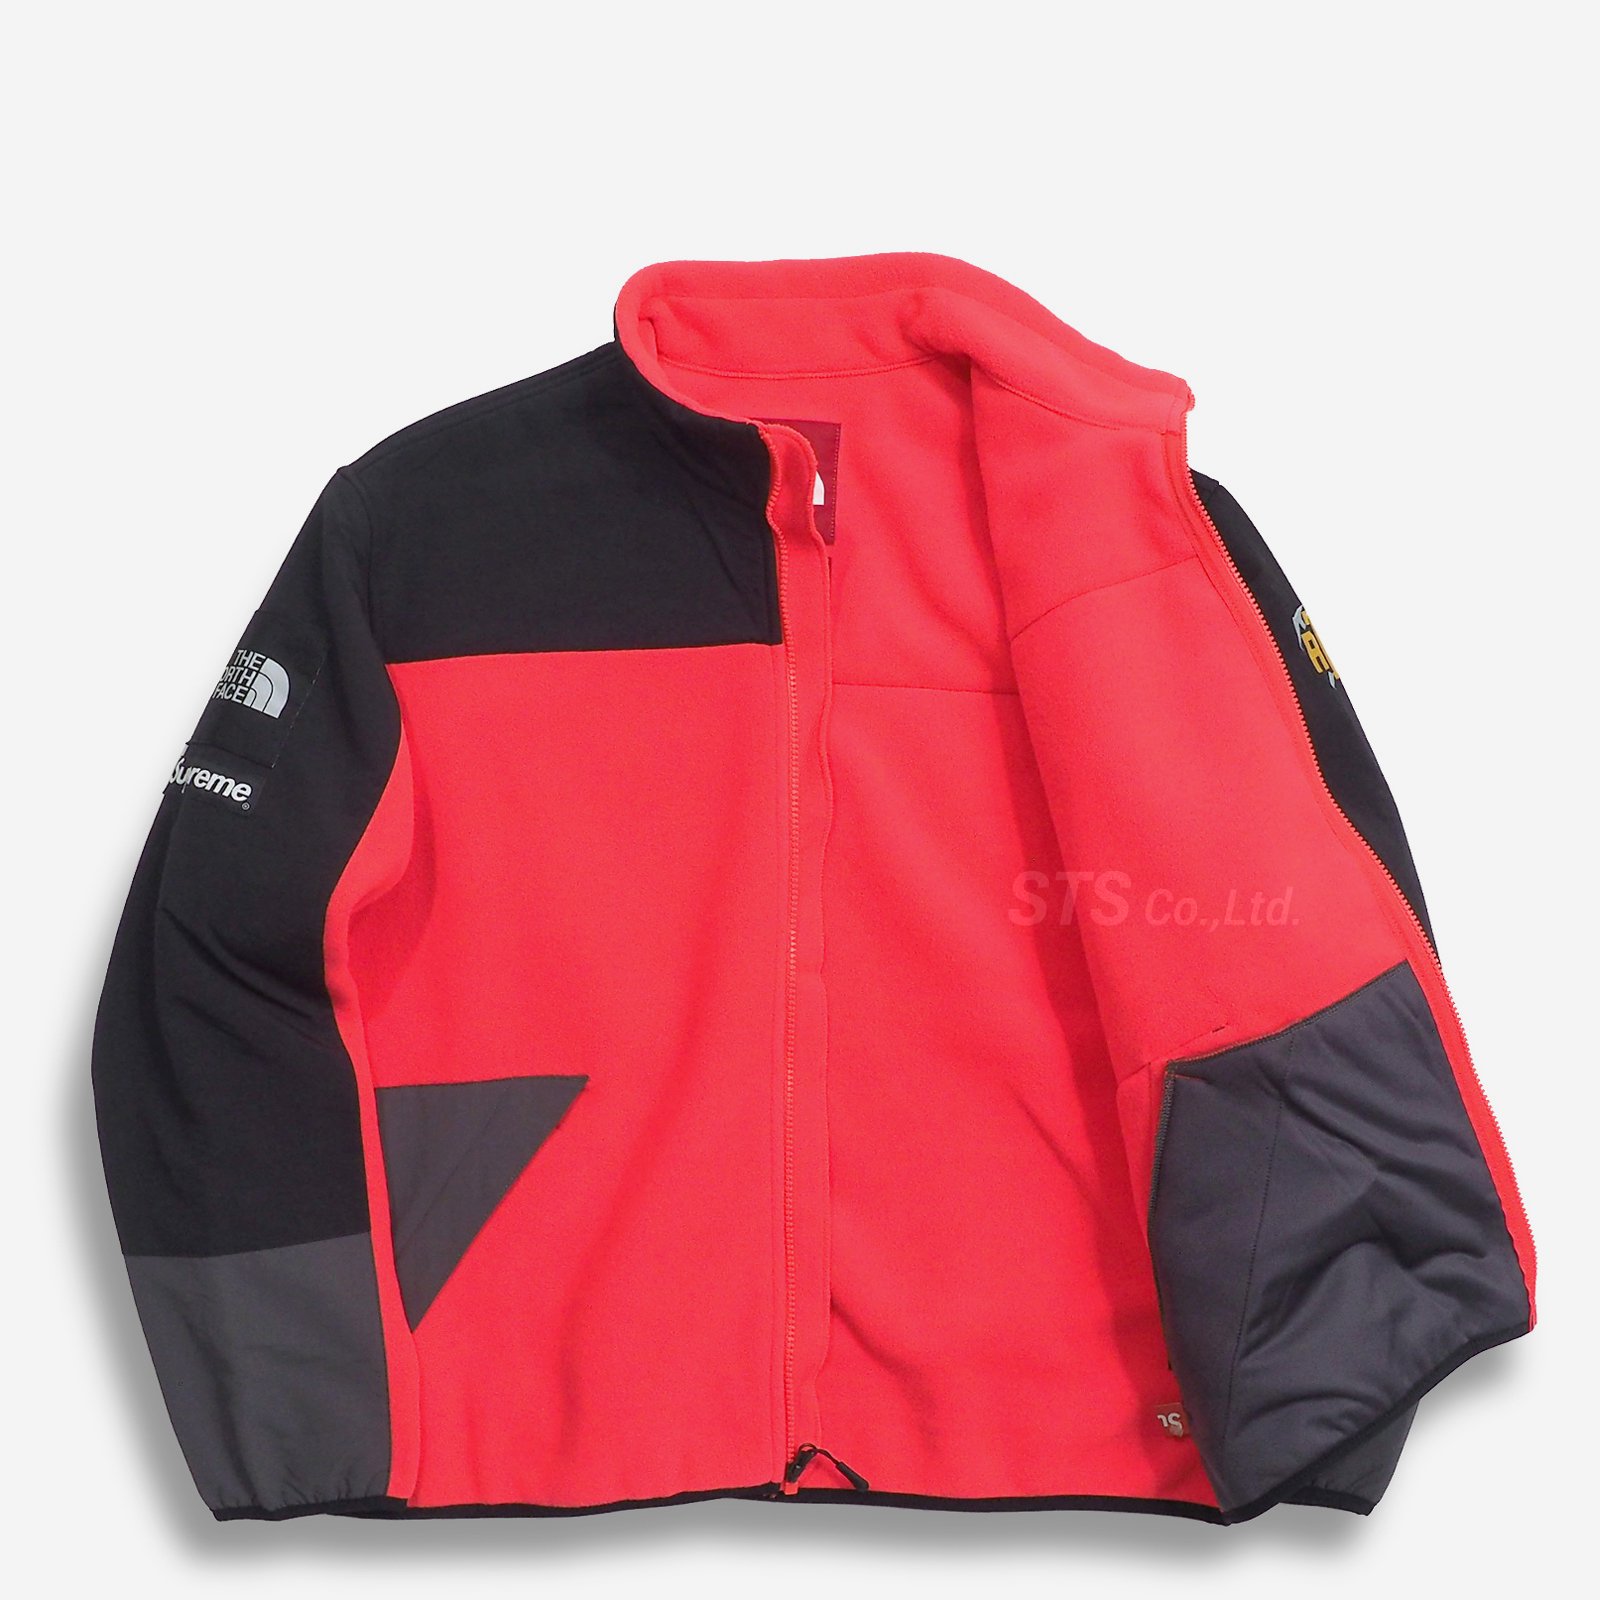 XL The North Face RTG Fleece Jacket